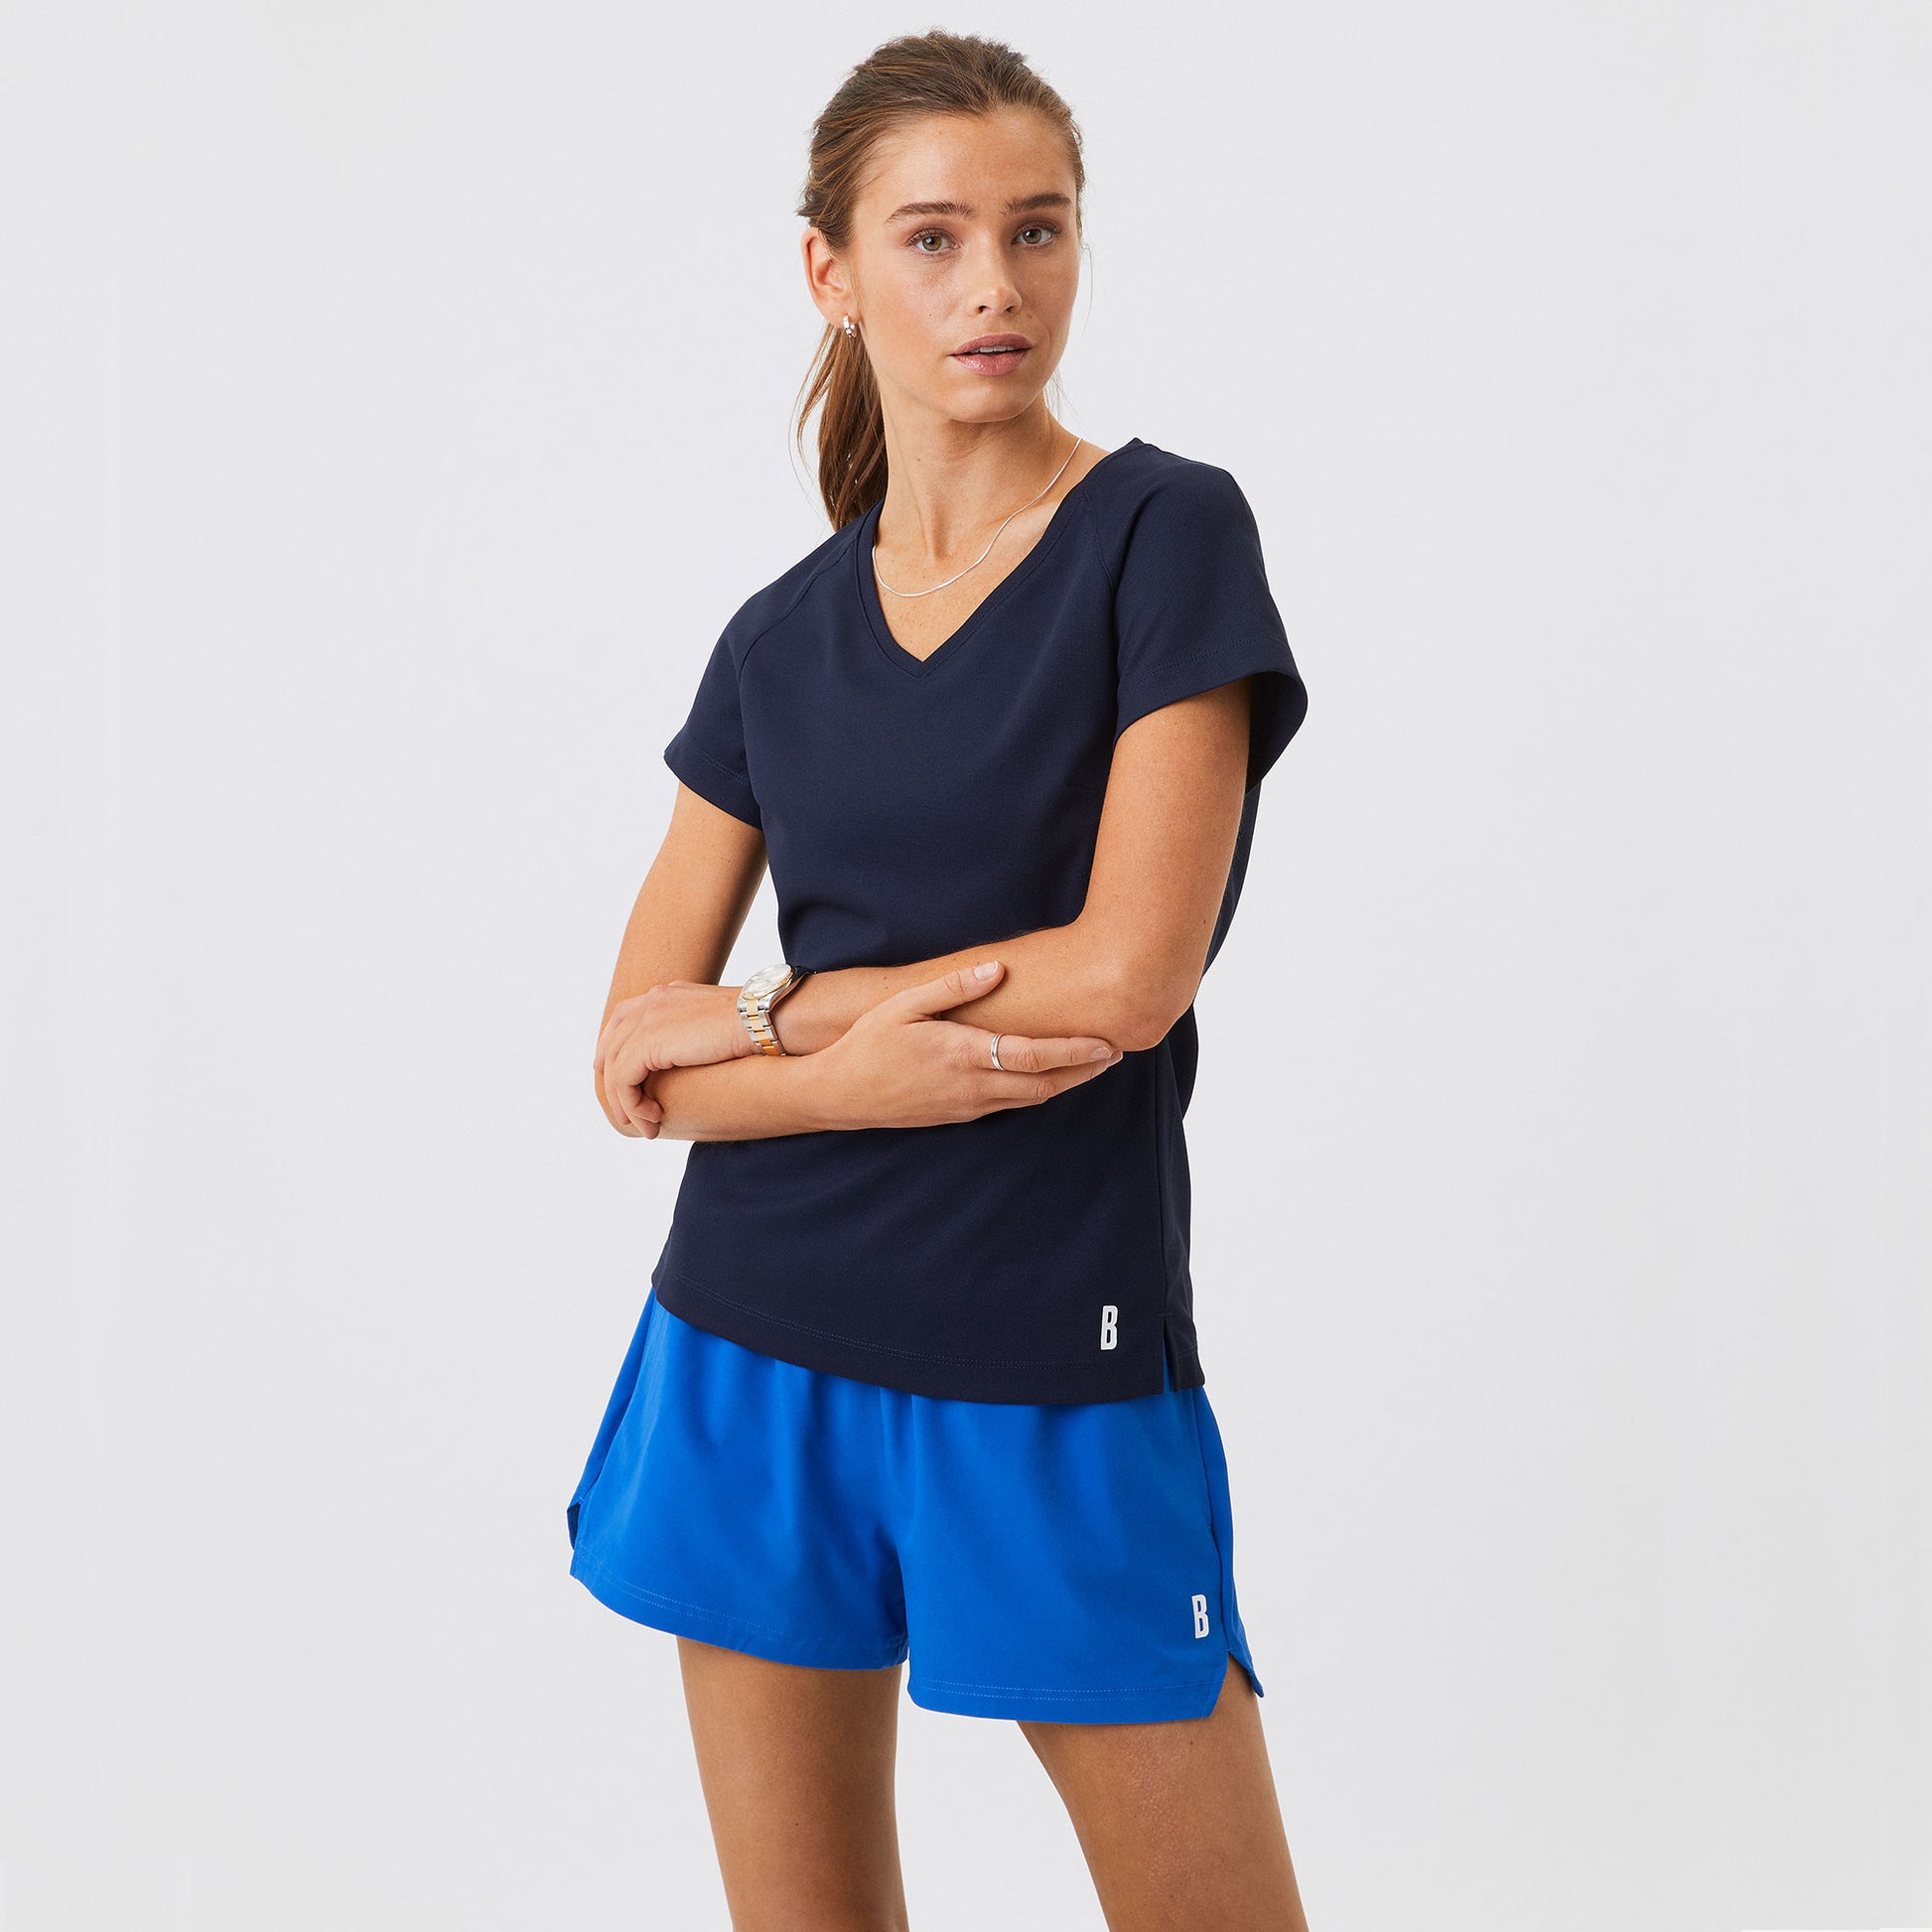 Björn Borg Ace Women's Tennis Shirt Dark Blue (1)